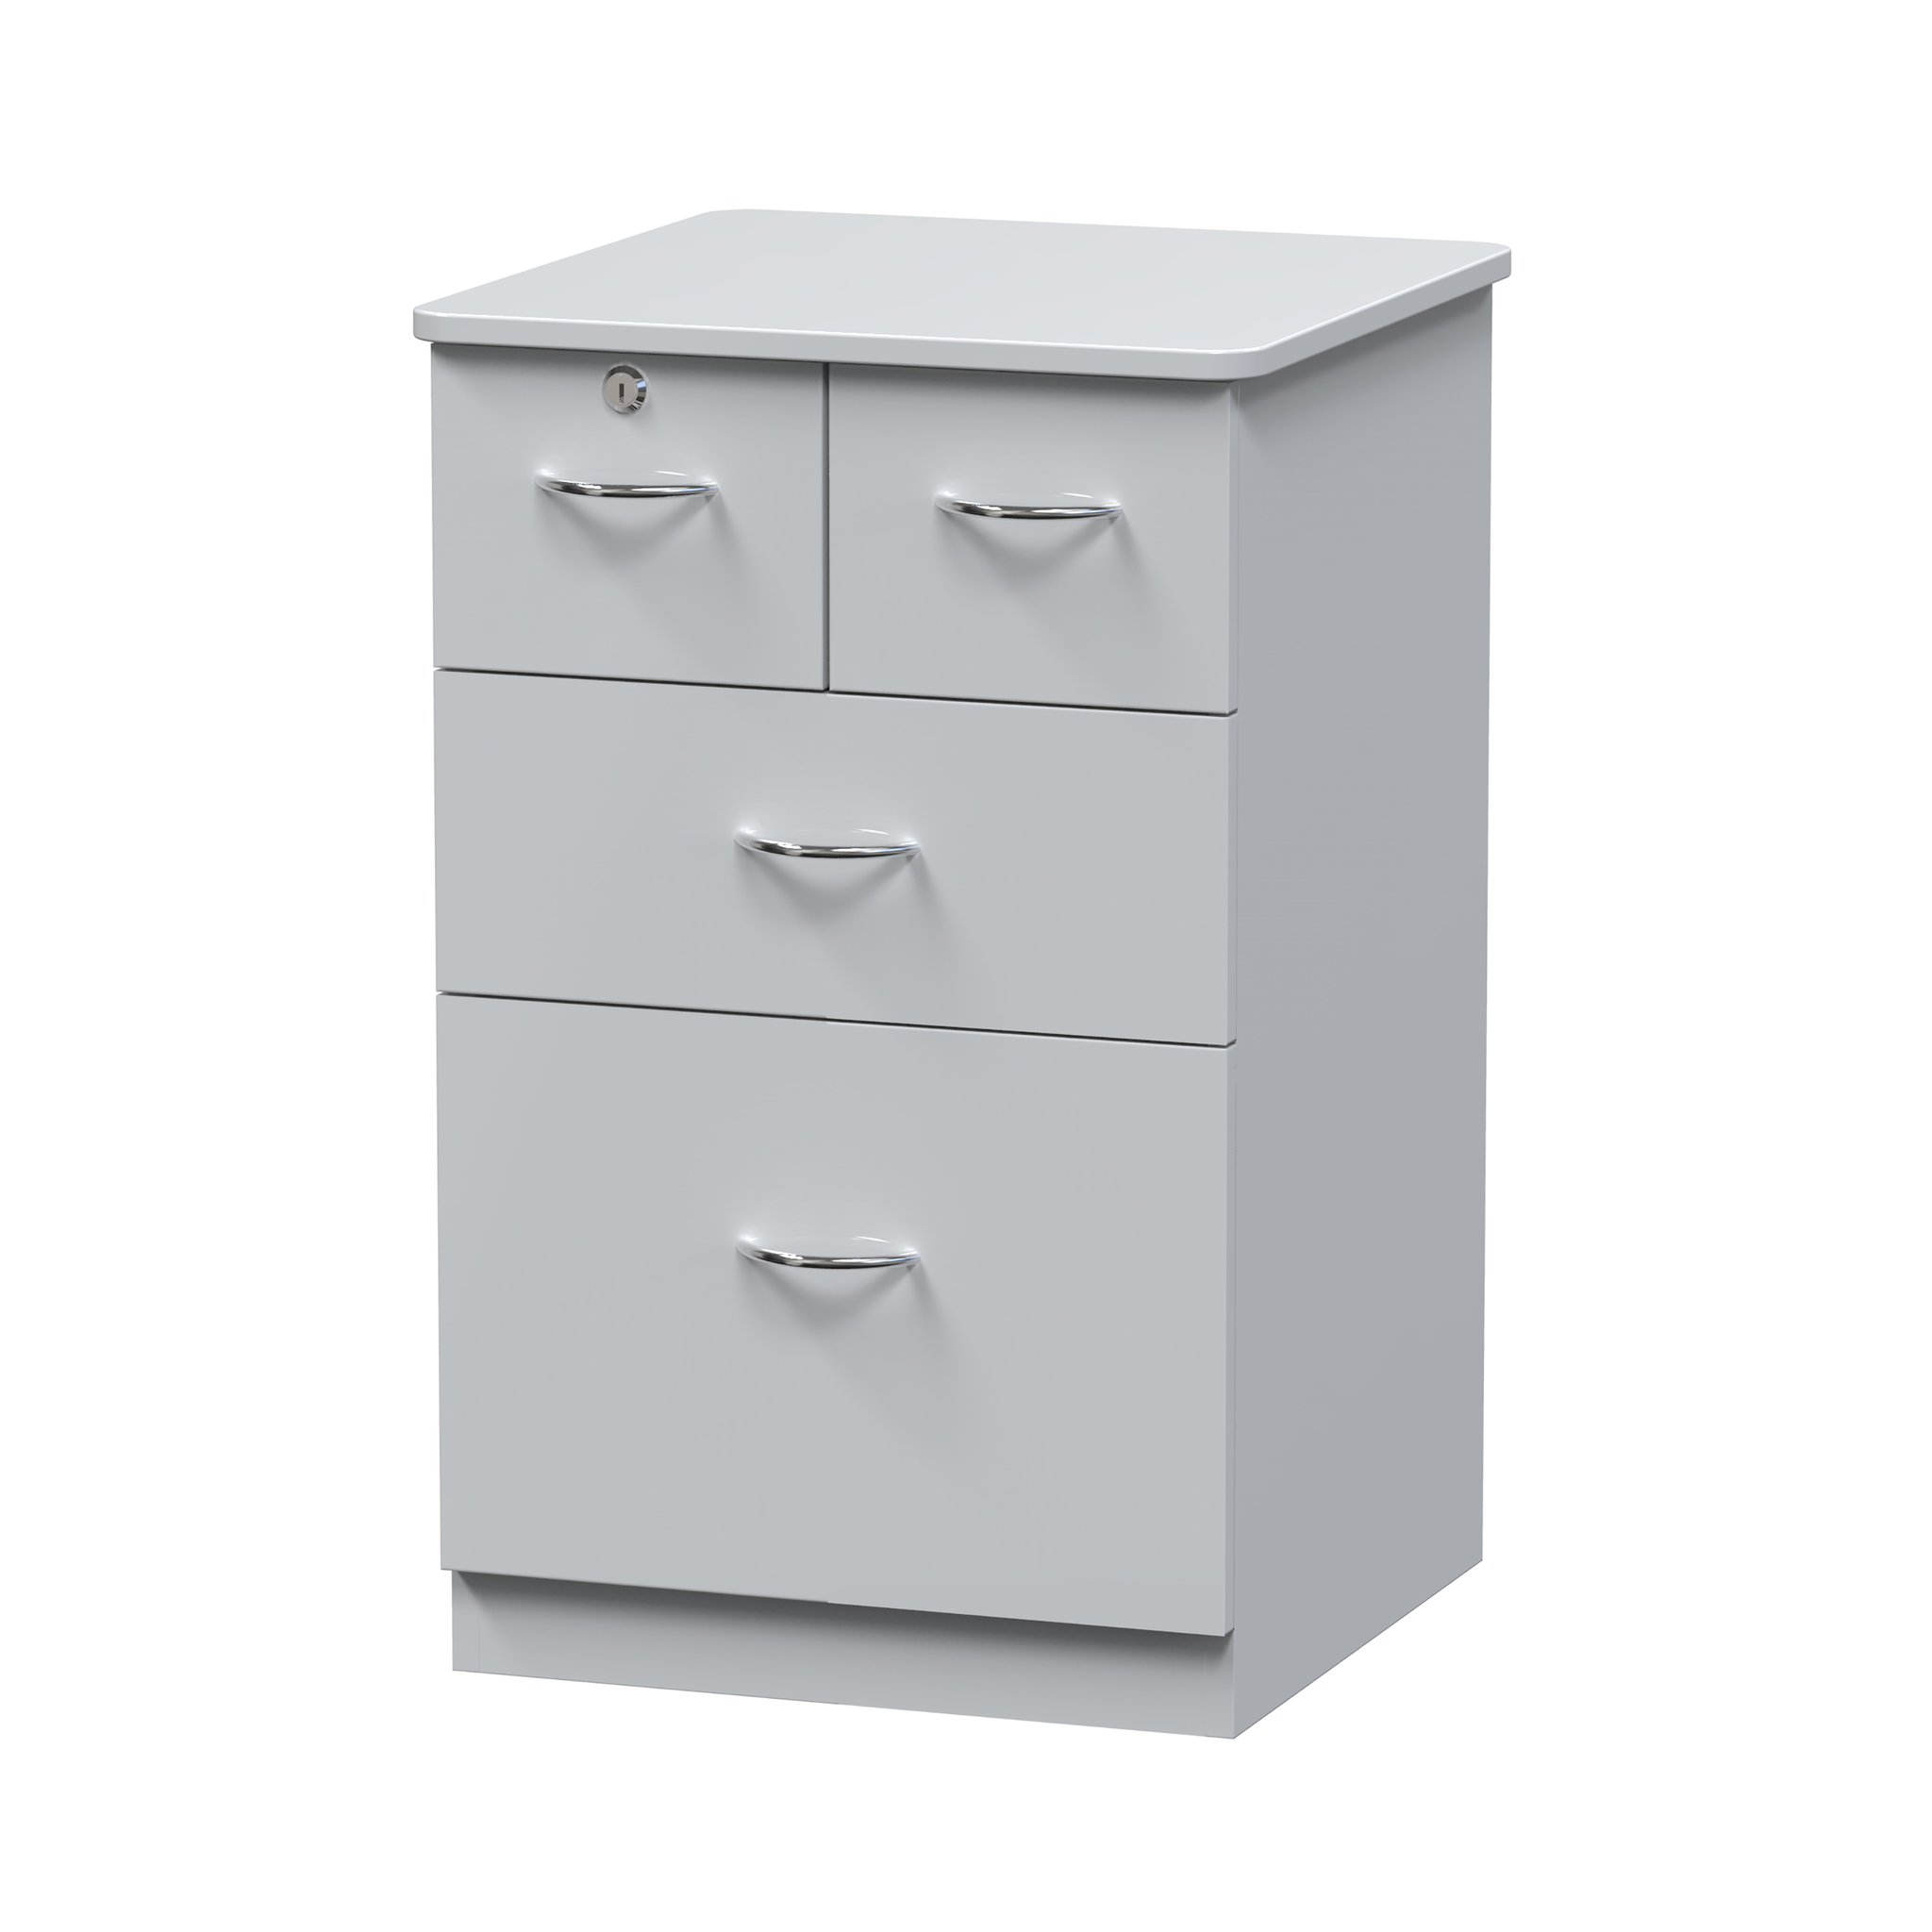 Bedside Locker- 4 Drawer with Split Top, Ash White